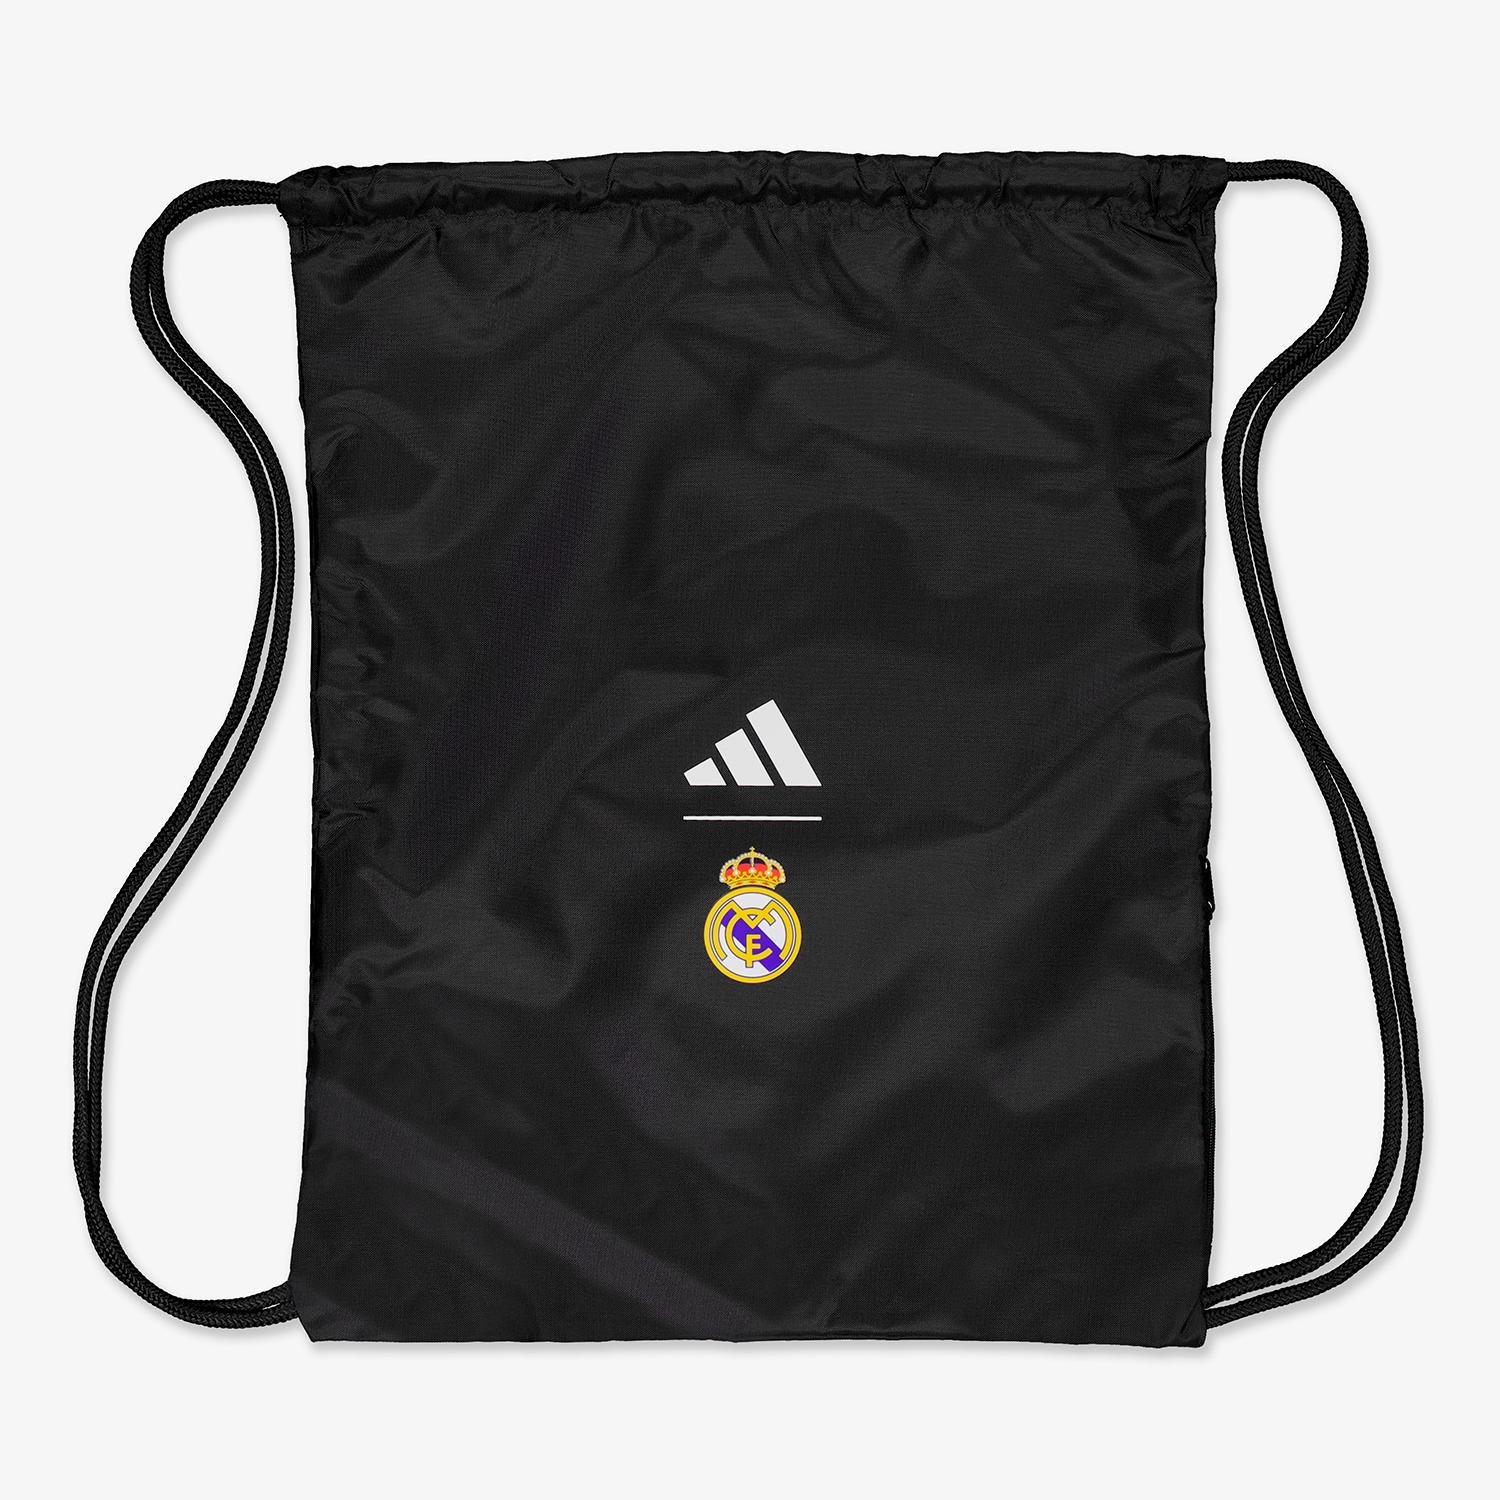 Bolsos Real Madrid Adidas